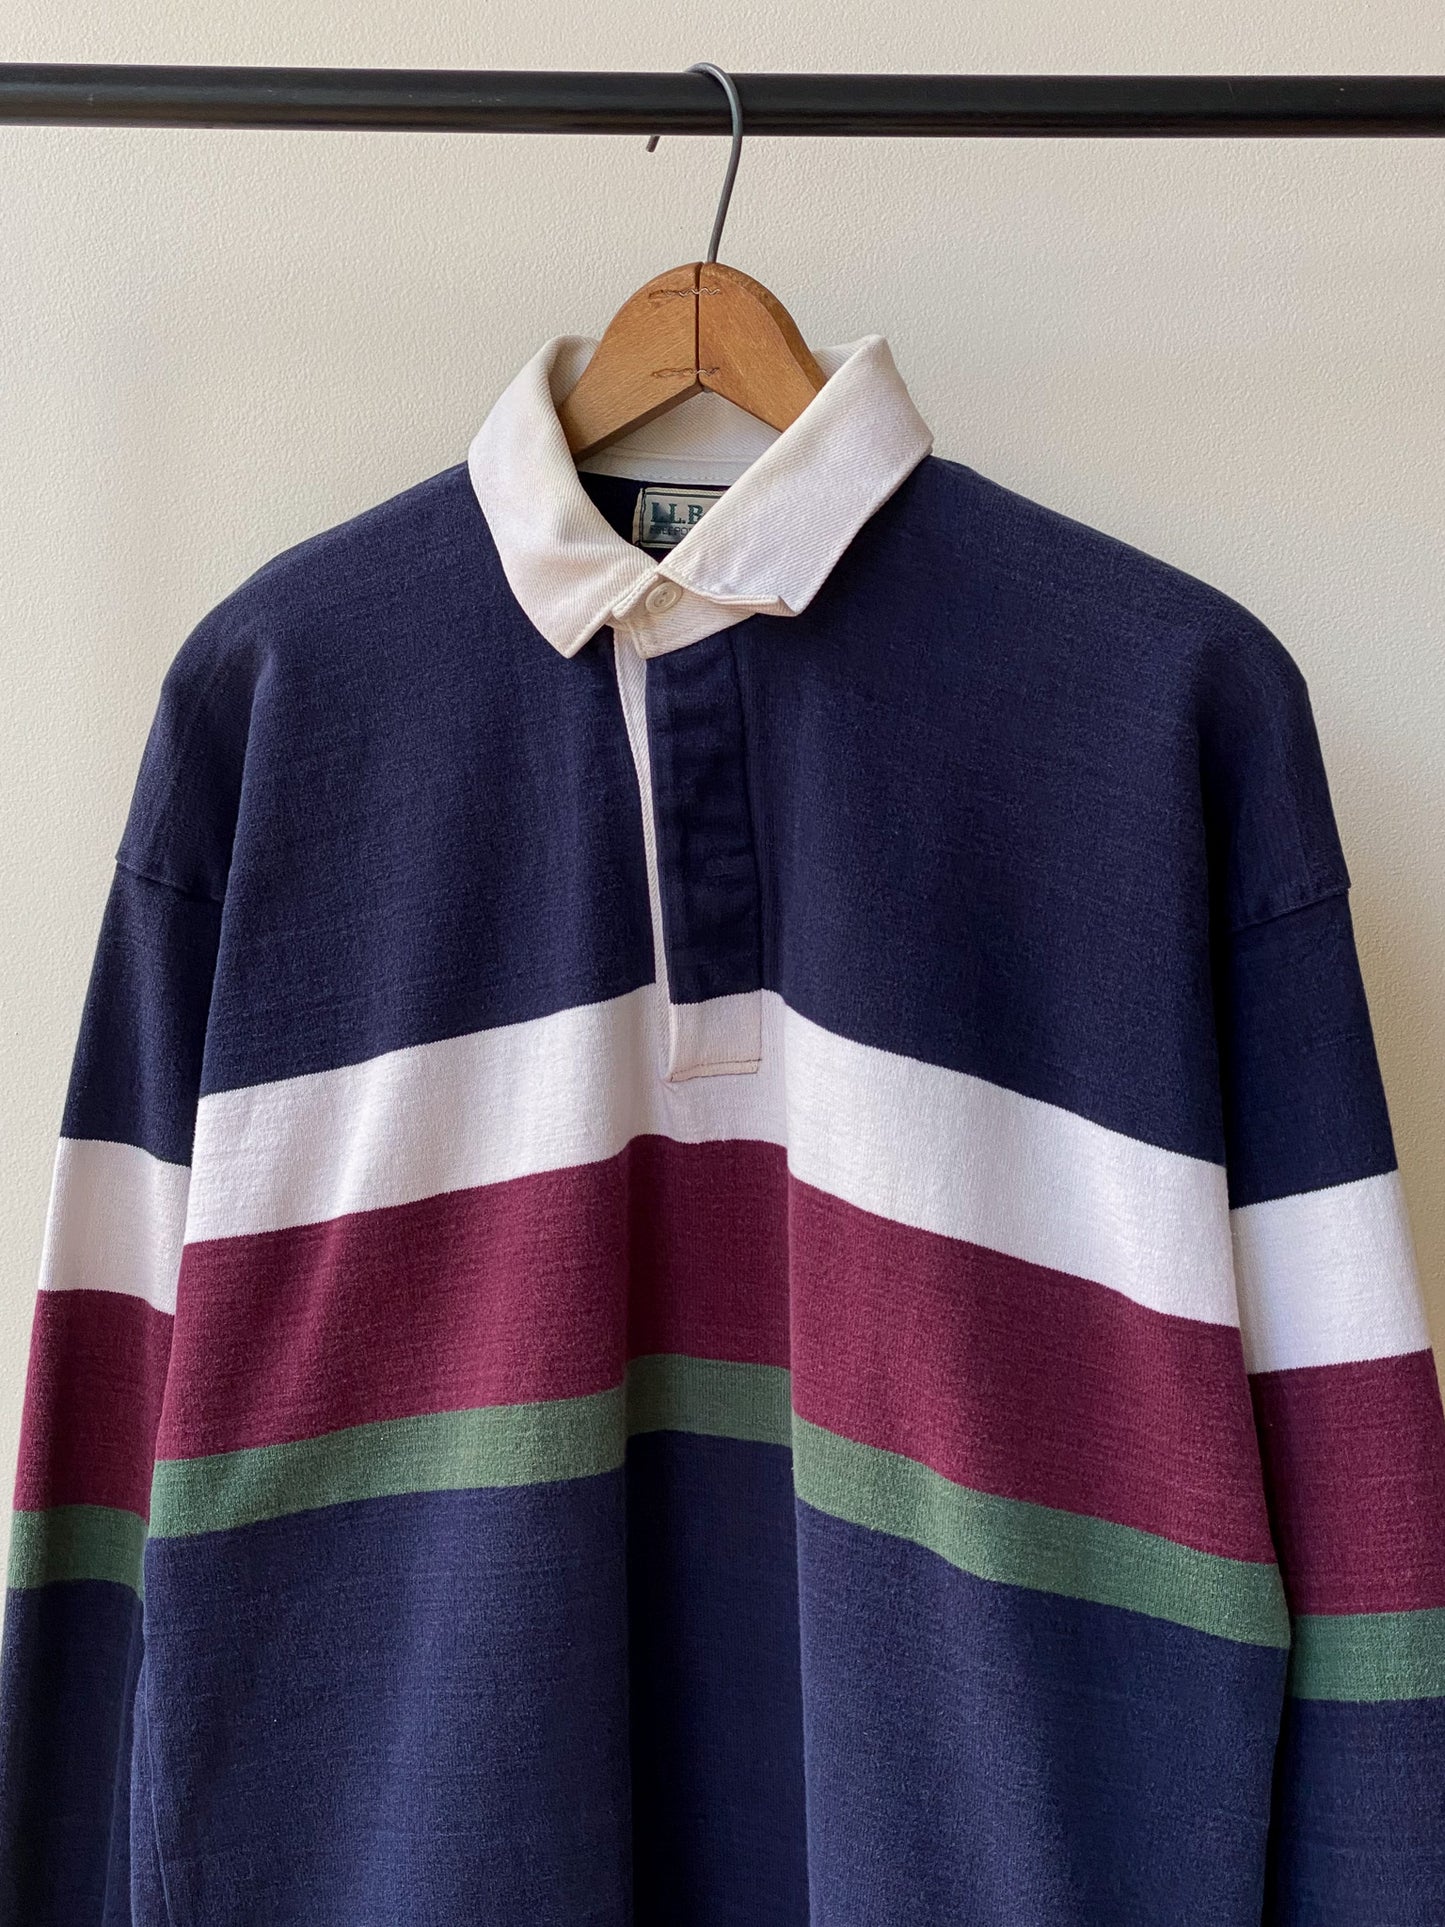 90's L.L.Bean Colorblock Rugby Shirt—[L]